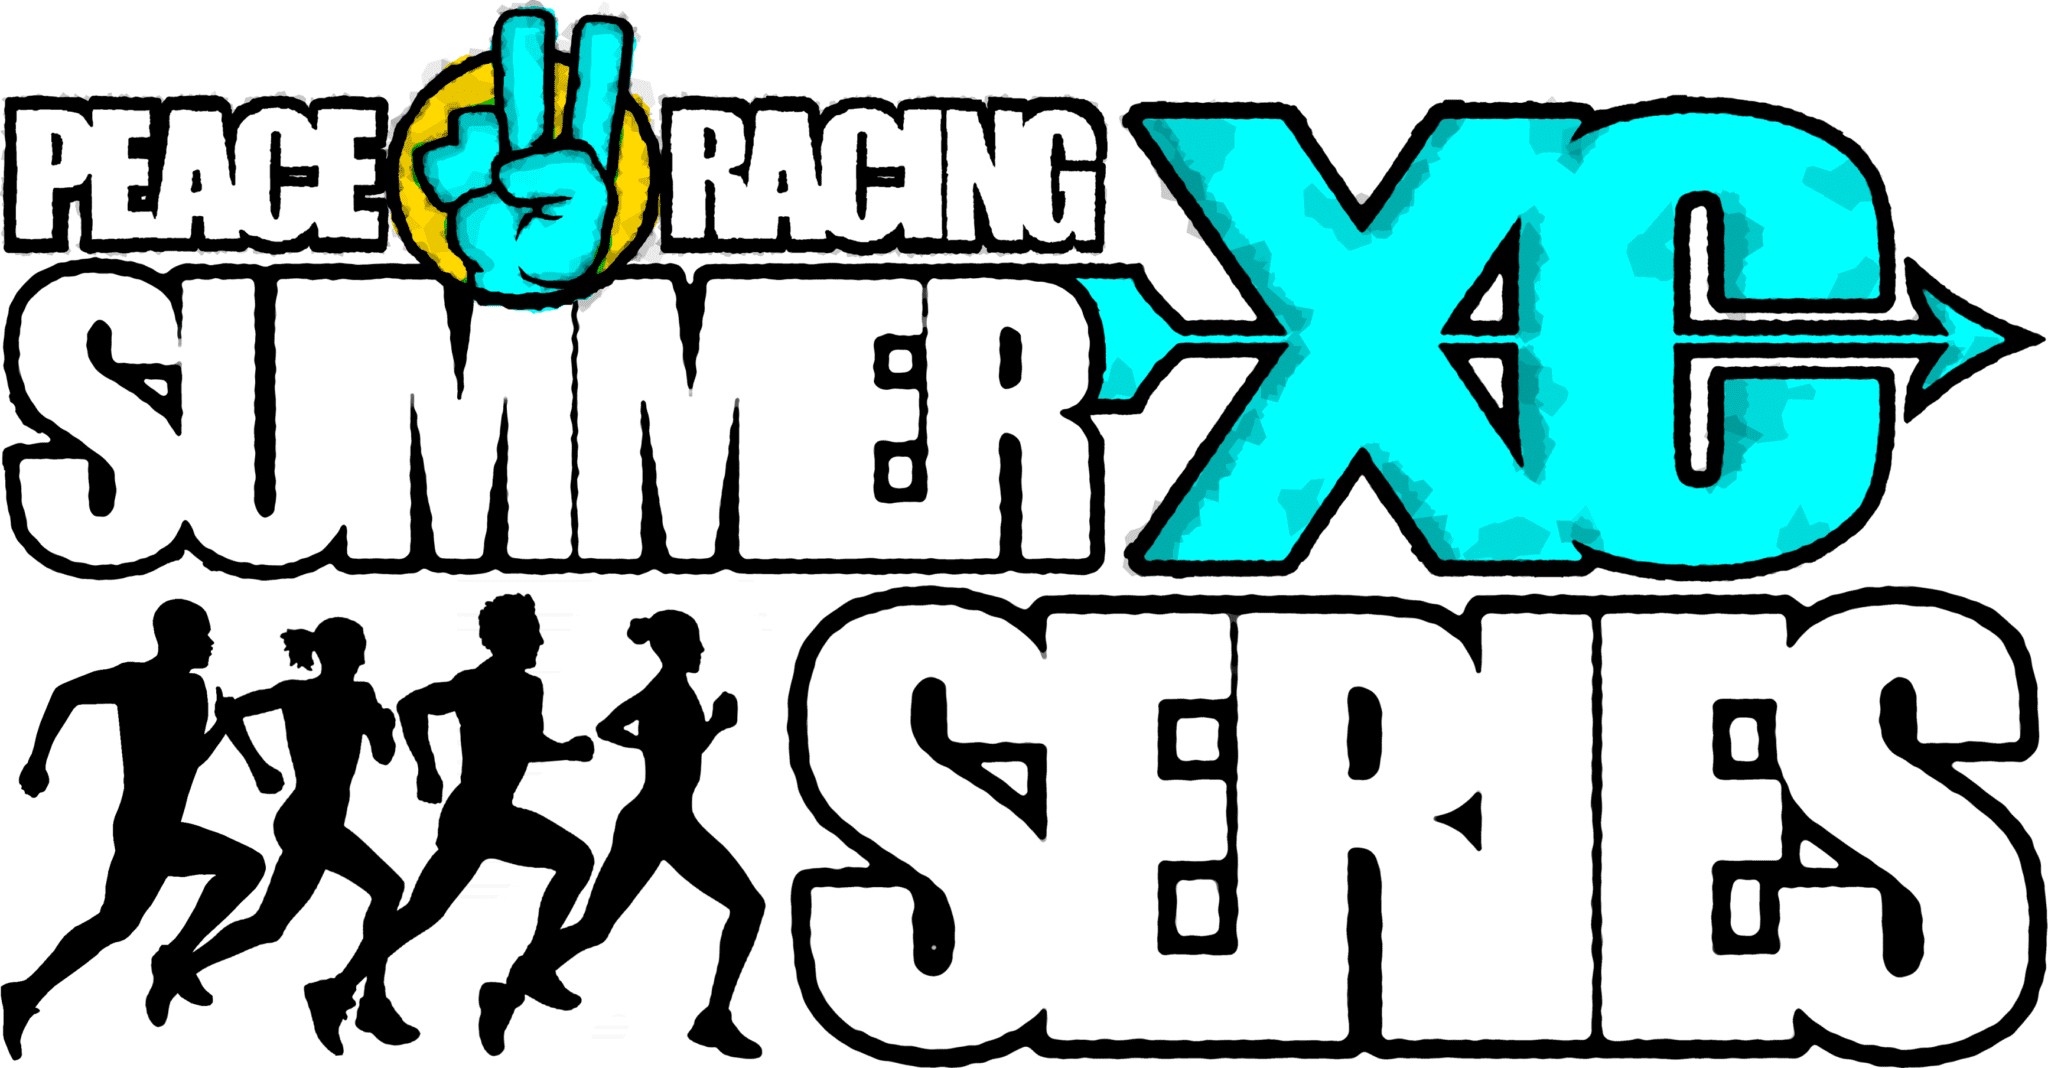 Santarelli Memorial XC 5K Race logo on RaceRaves